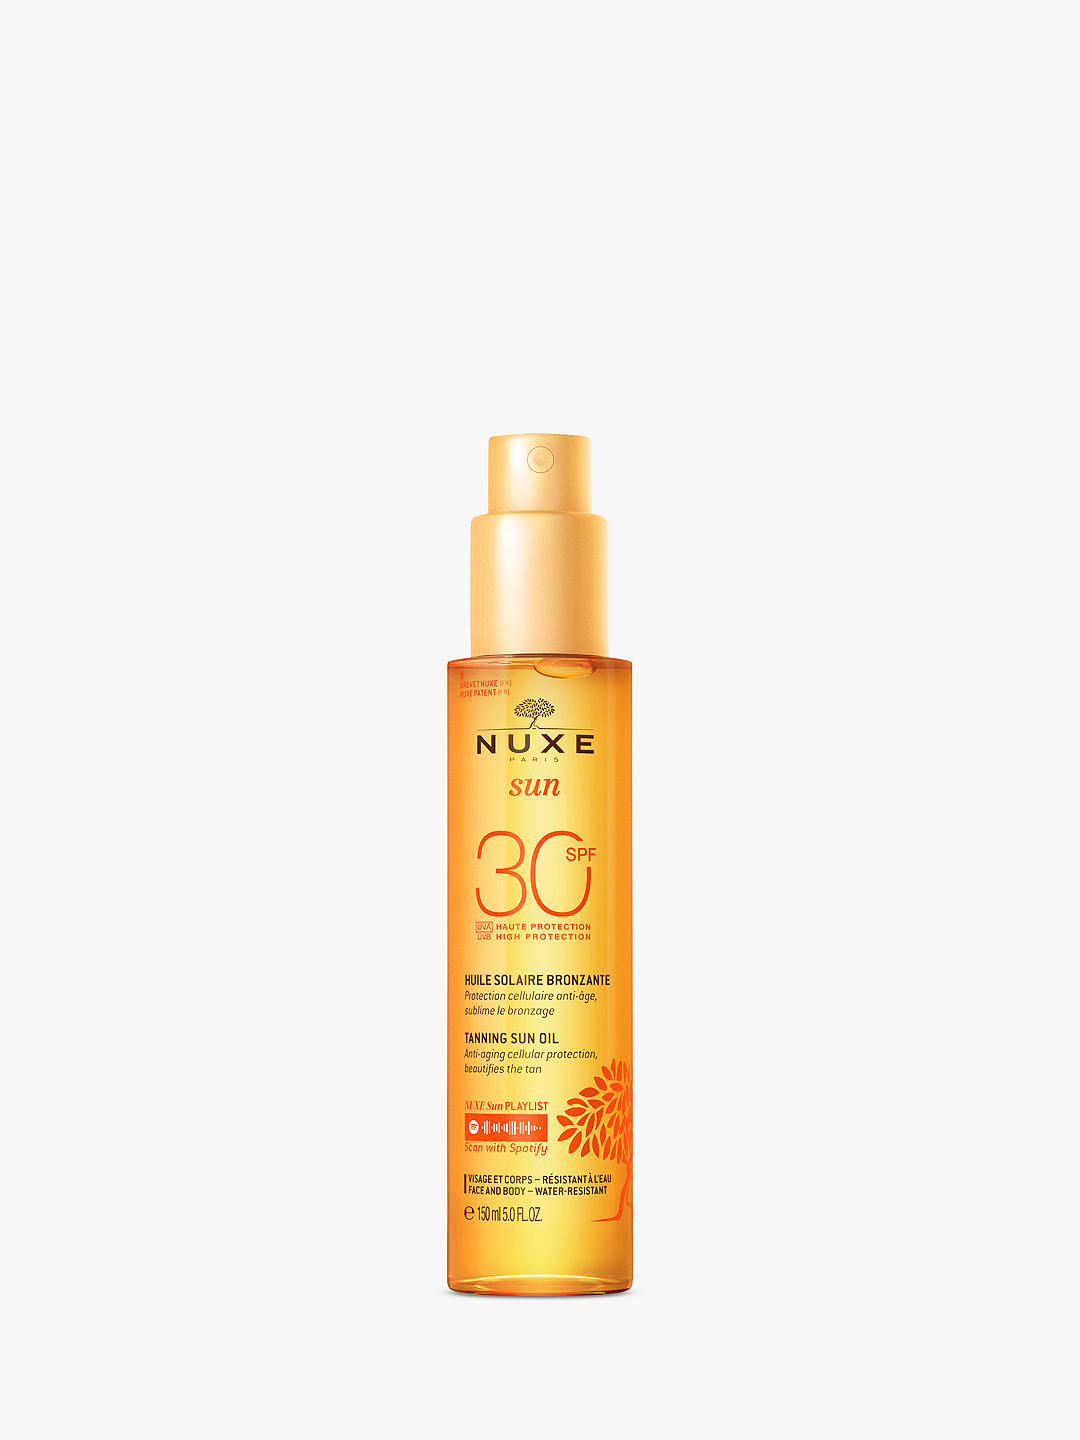 NUXE Sun Tanning Oil High Protection SPF 30 Face & Body, 150ml 1